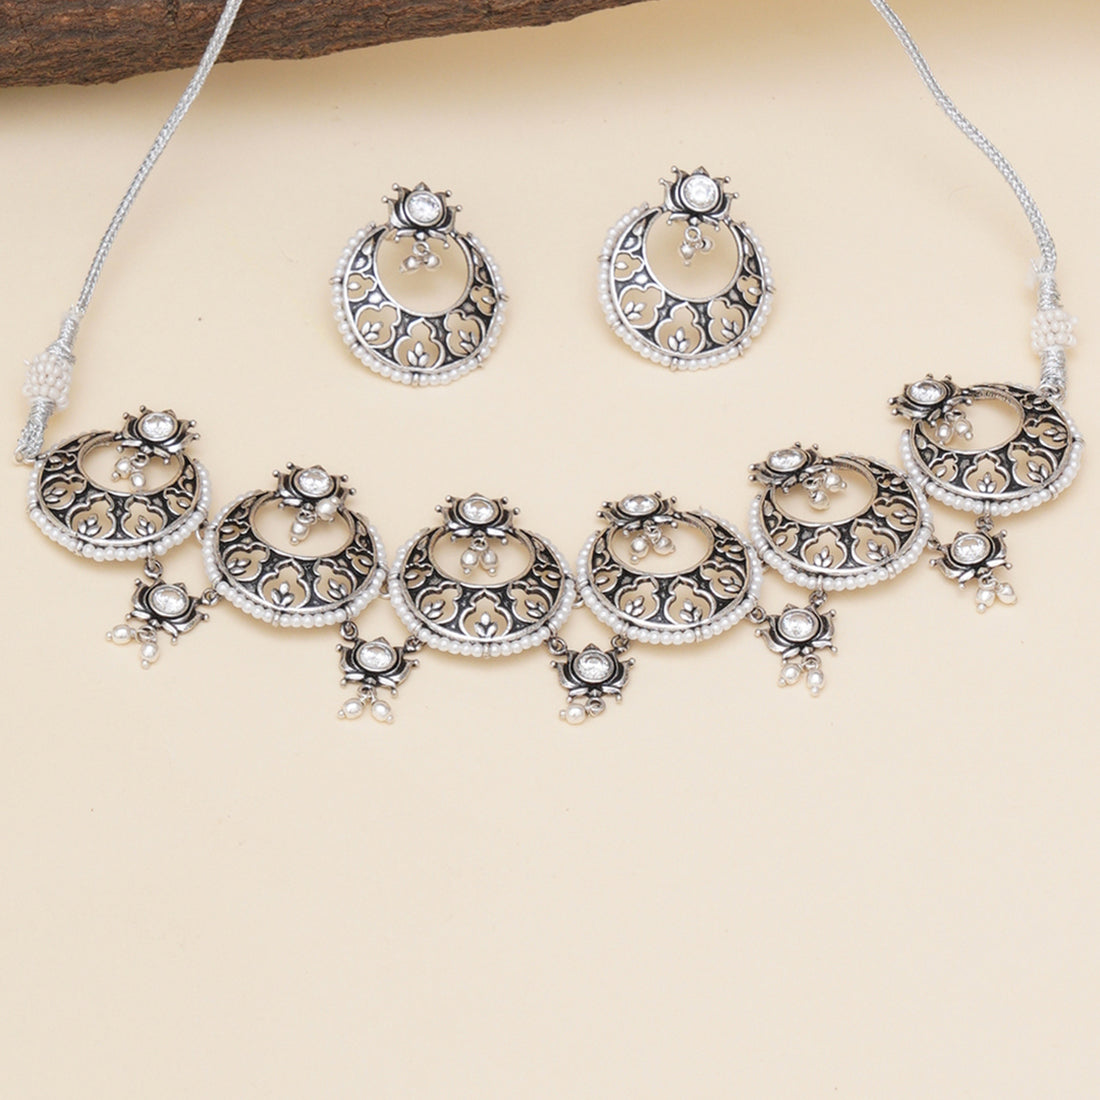 Women's Apsara Cresent Moon Silver Choker Necklace Set - Voylla